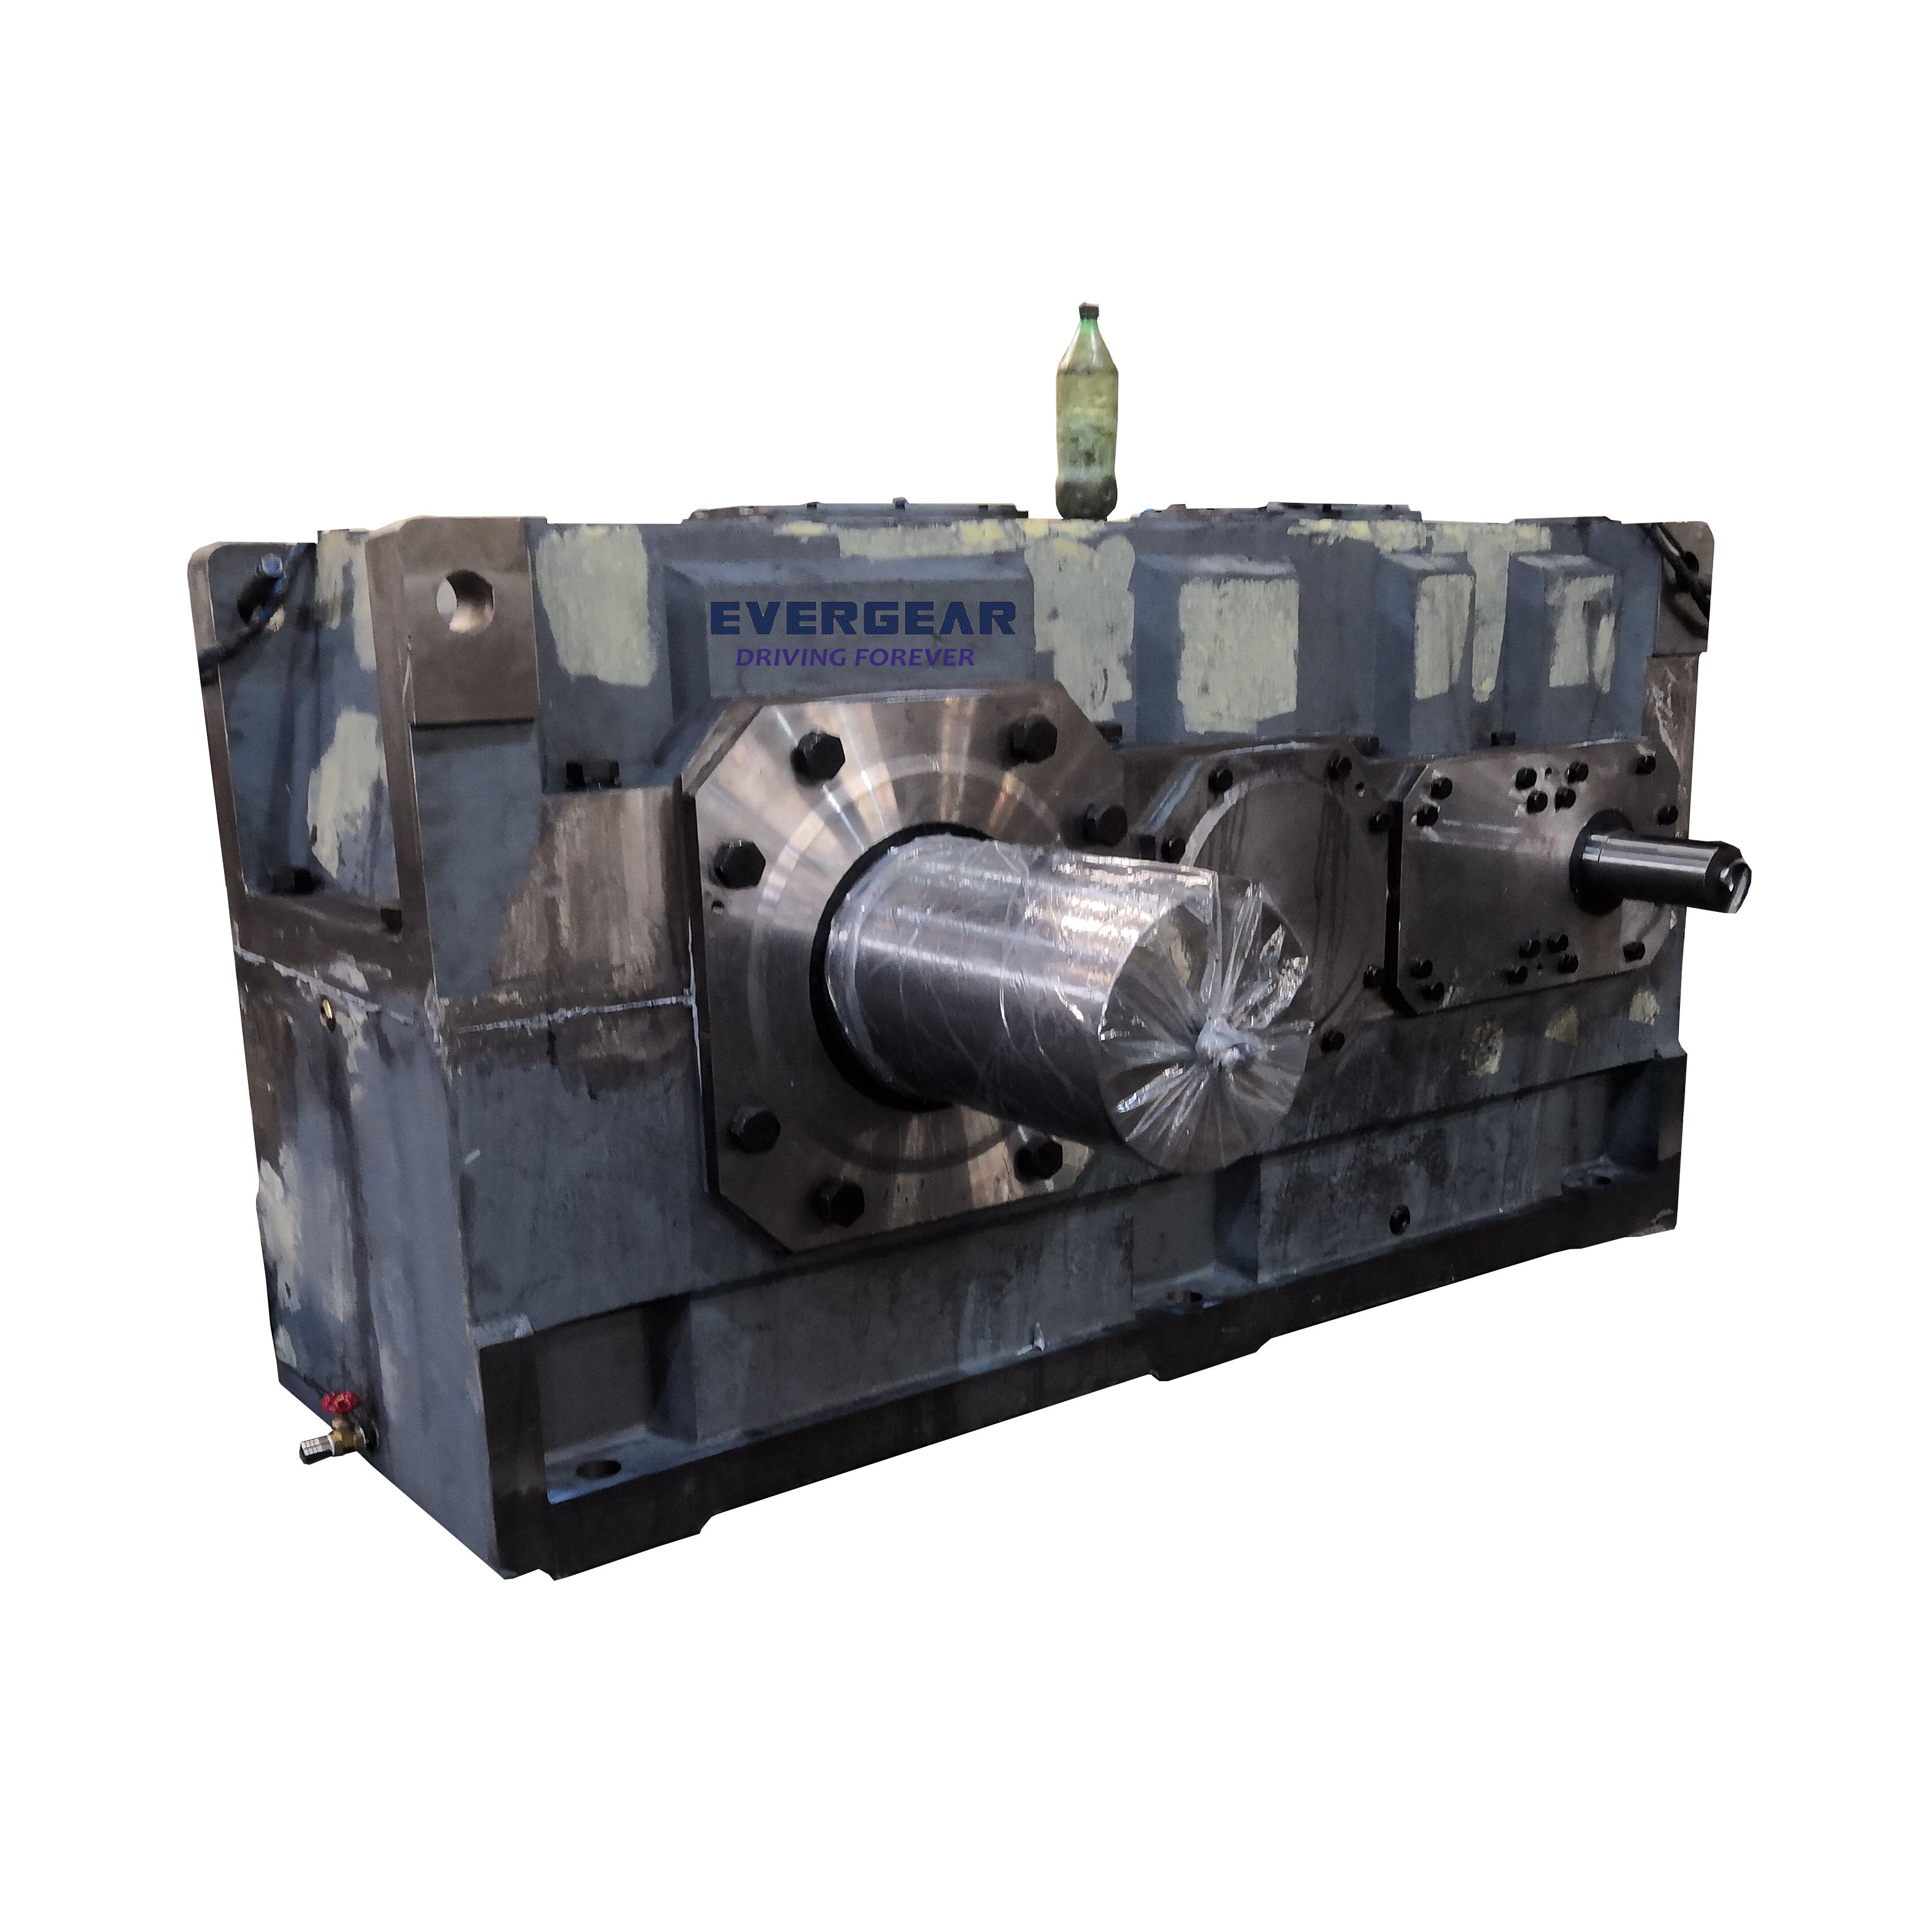 EVERGEAR H/B Series industrial gearbox russian reducer gear box 75 hp